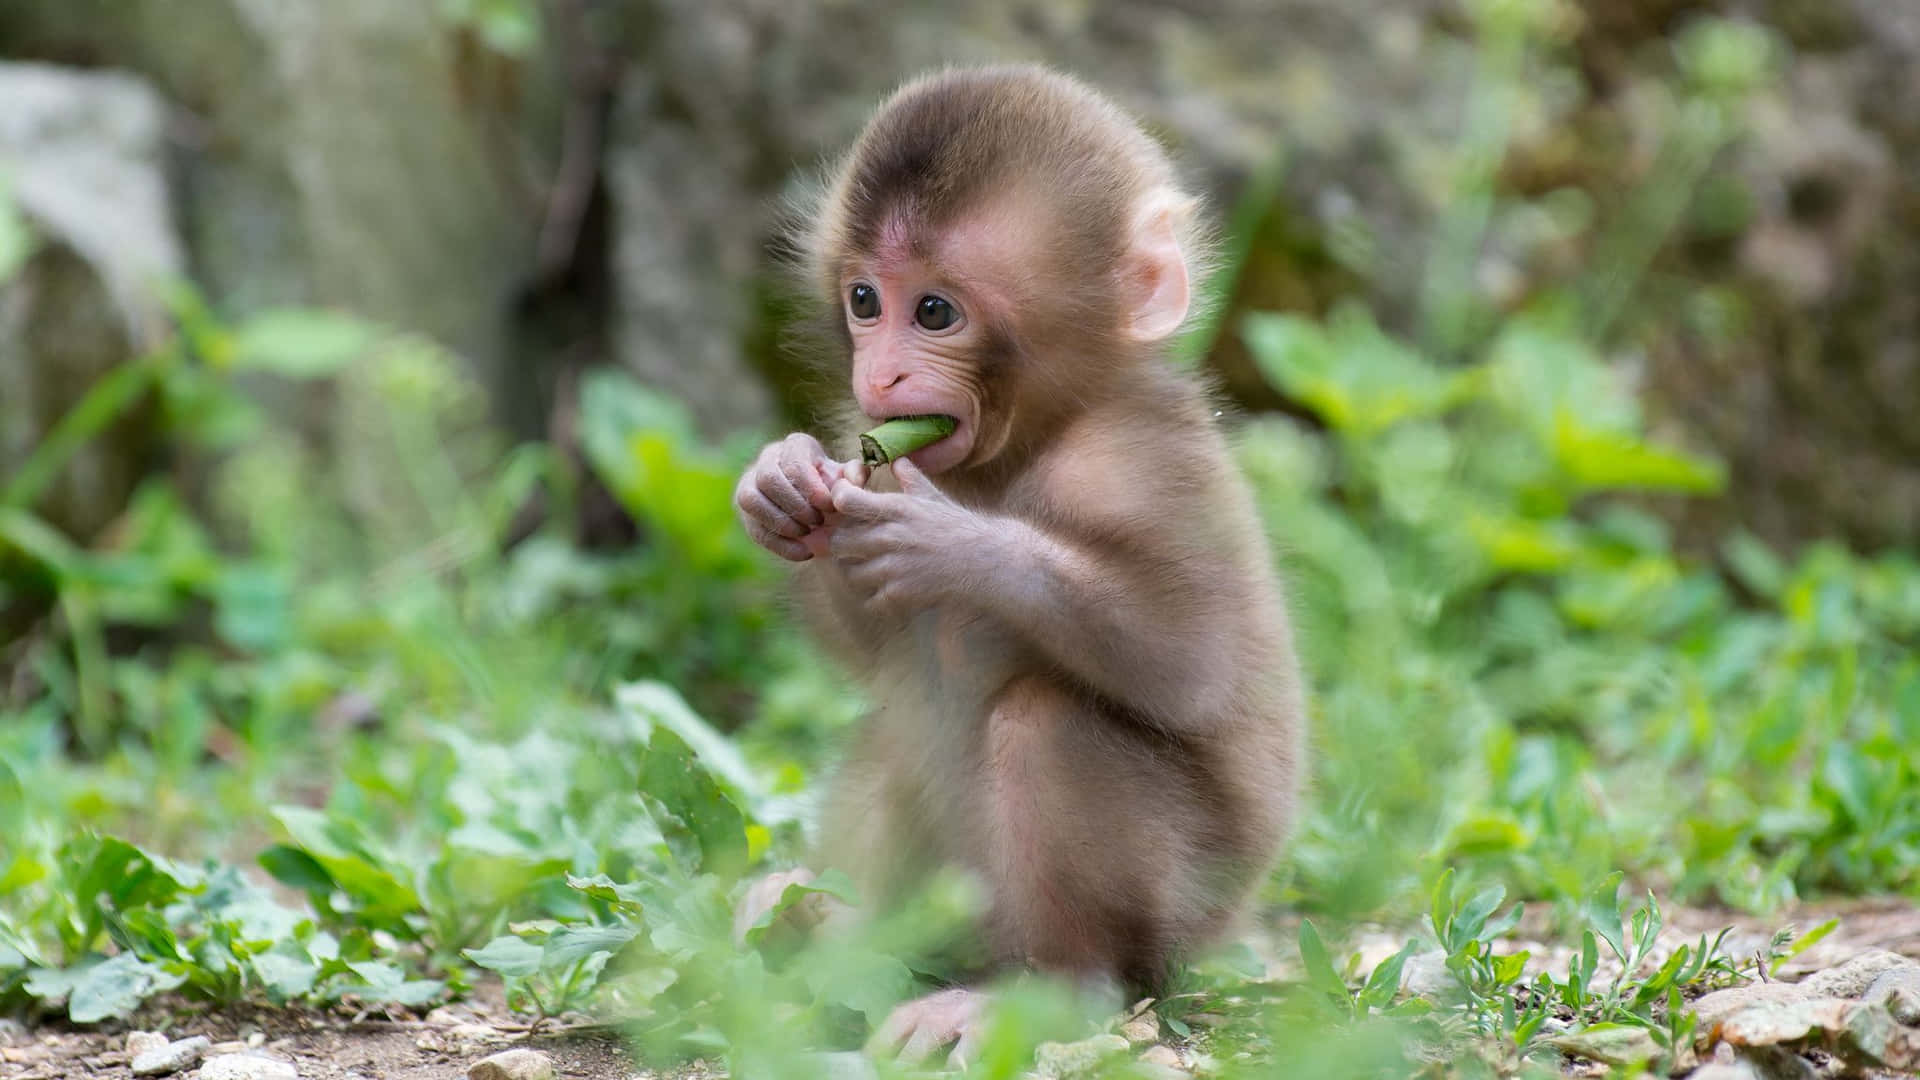 Baby Monkey Background